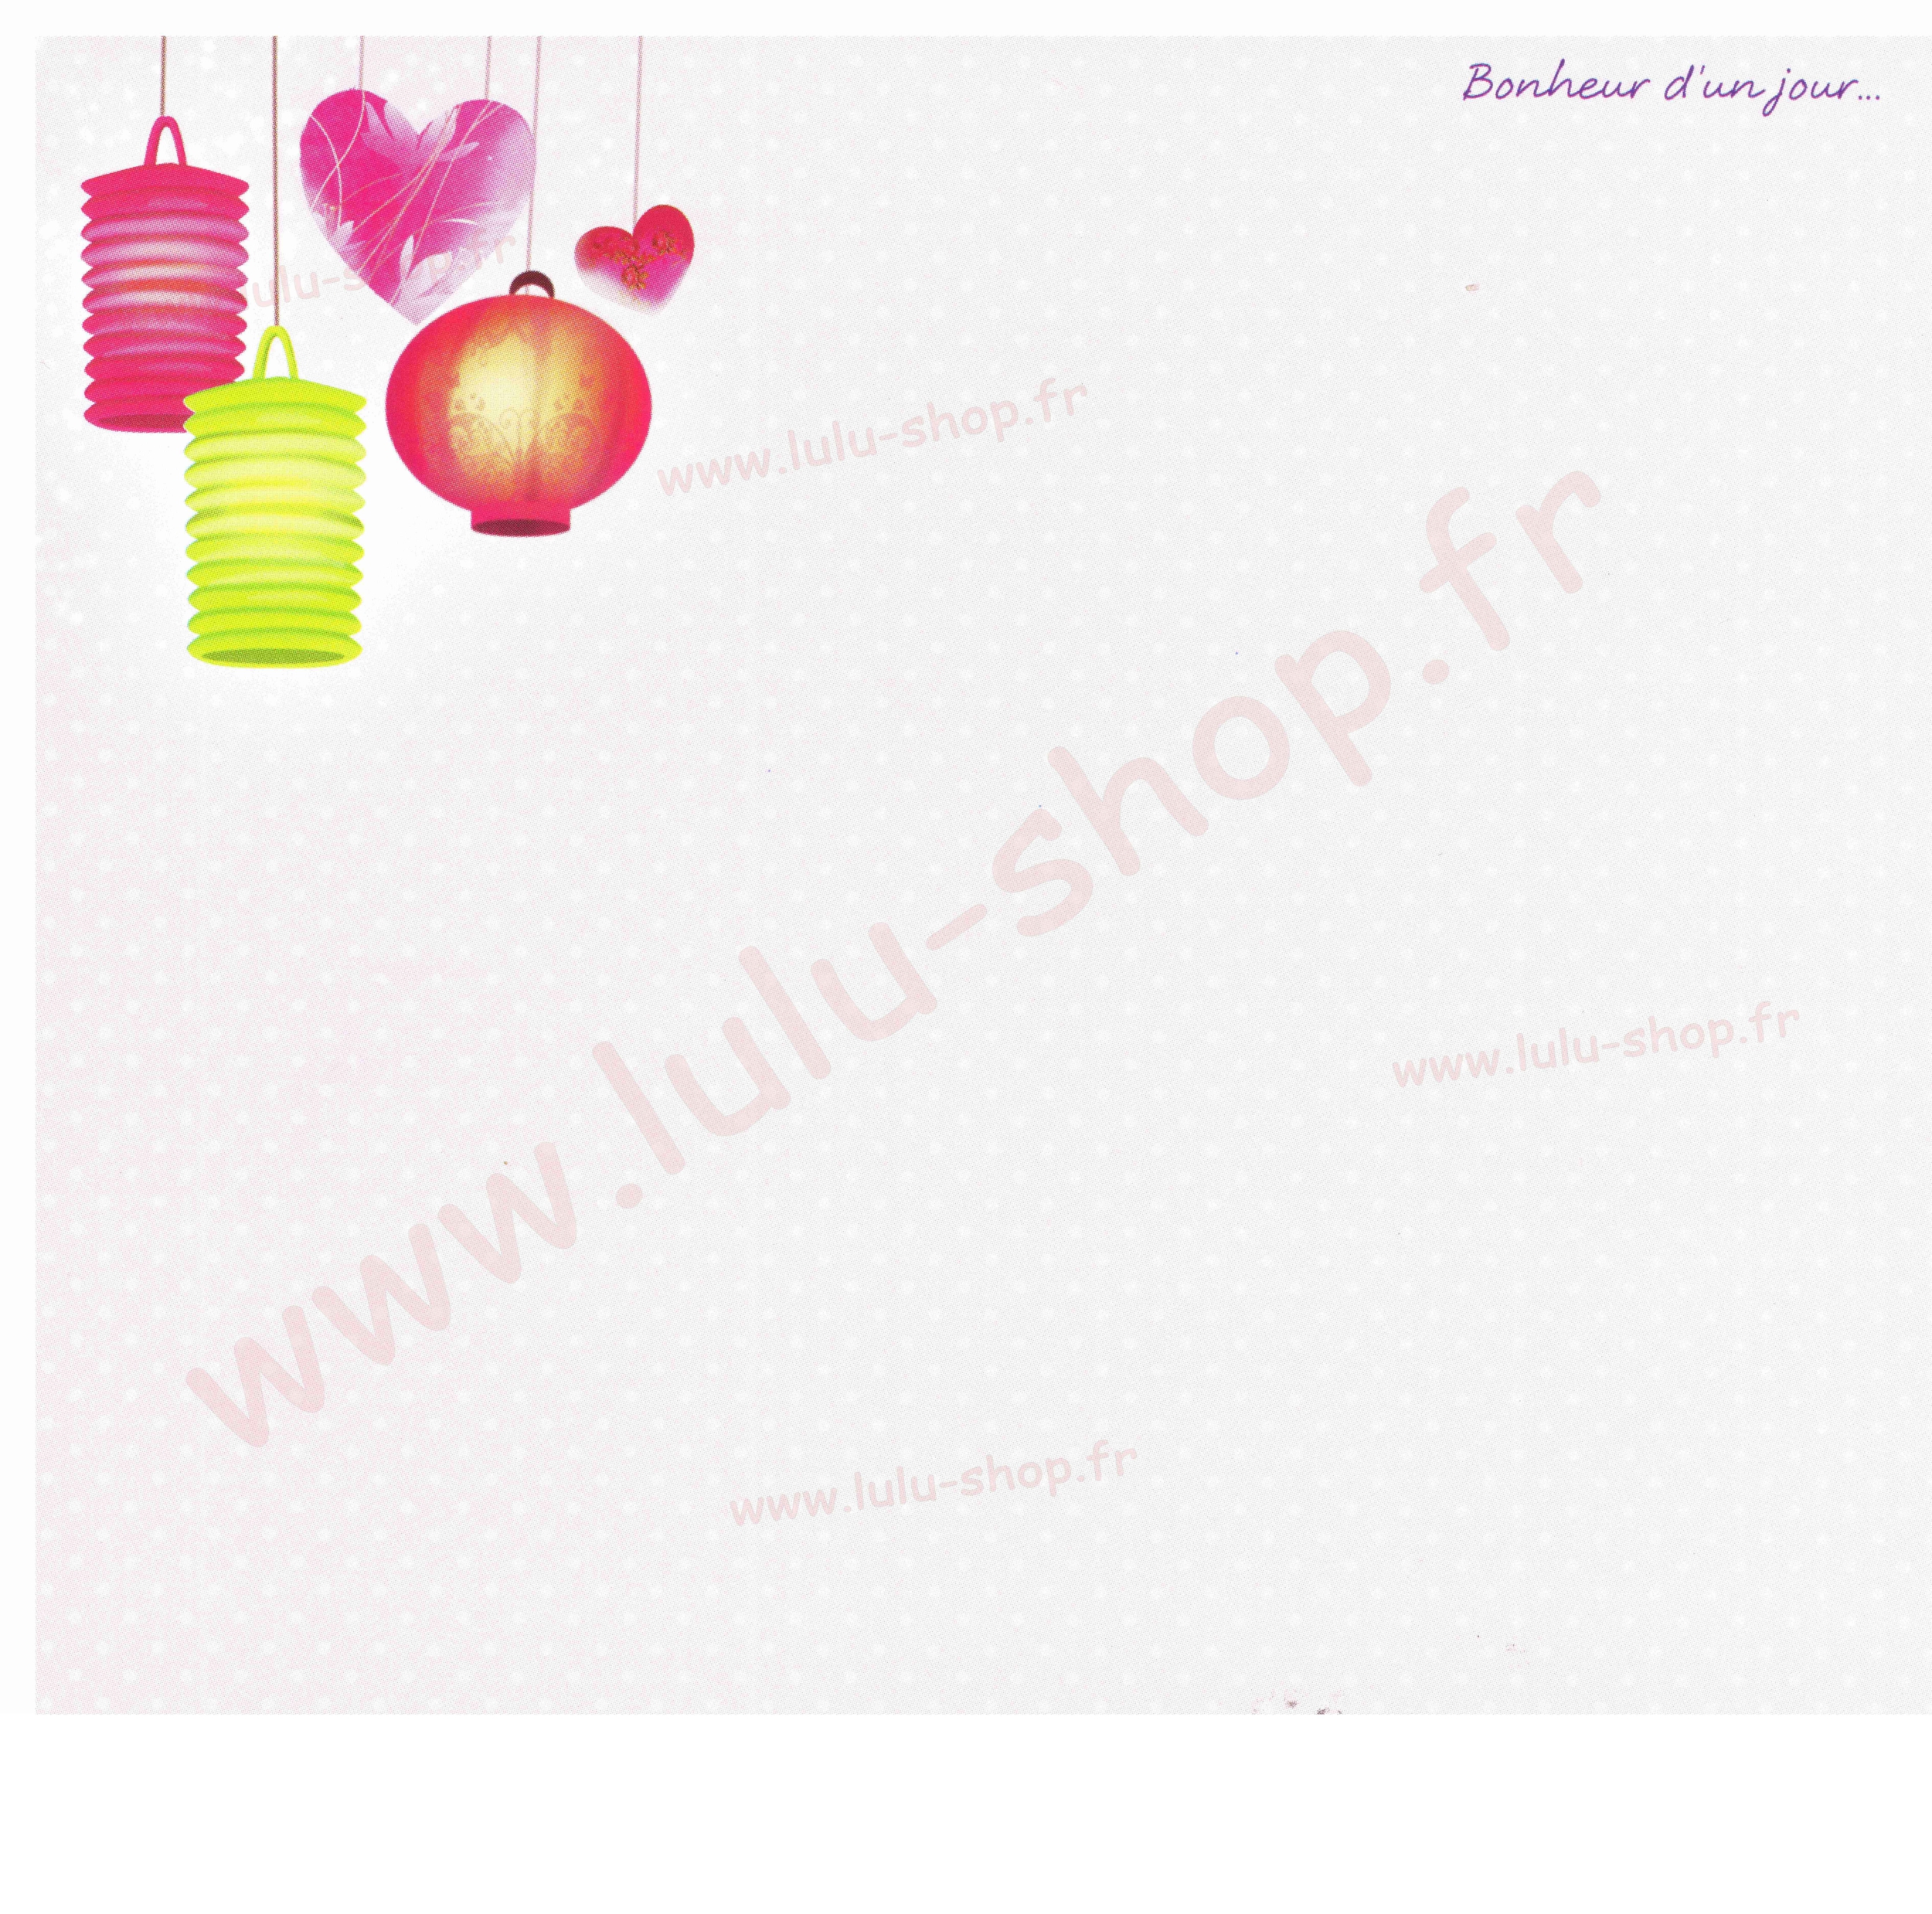 www.lulu-shop.fr carte postale Bonheur dun jour